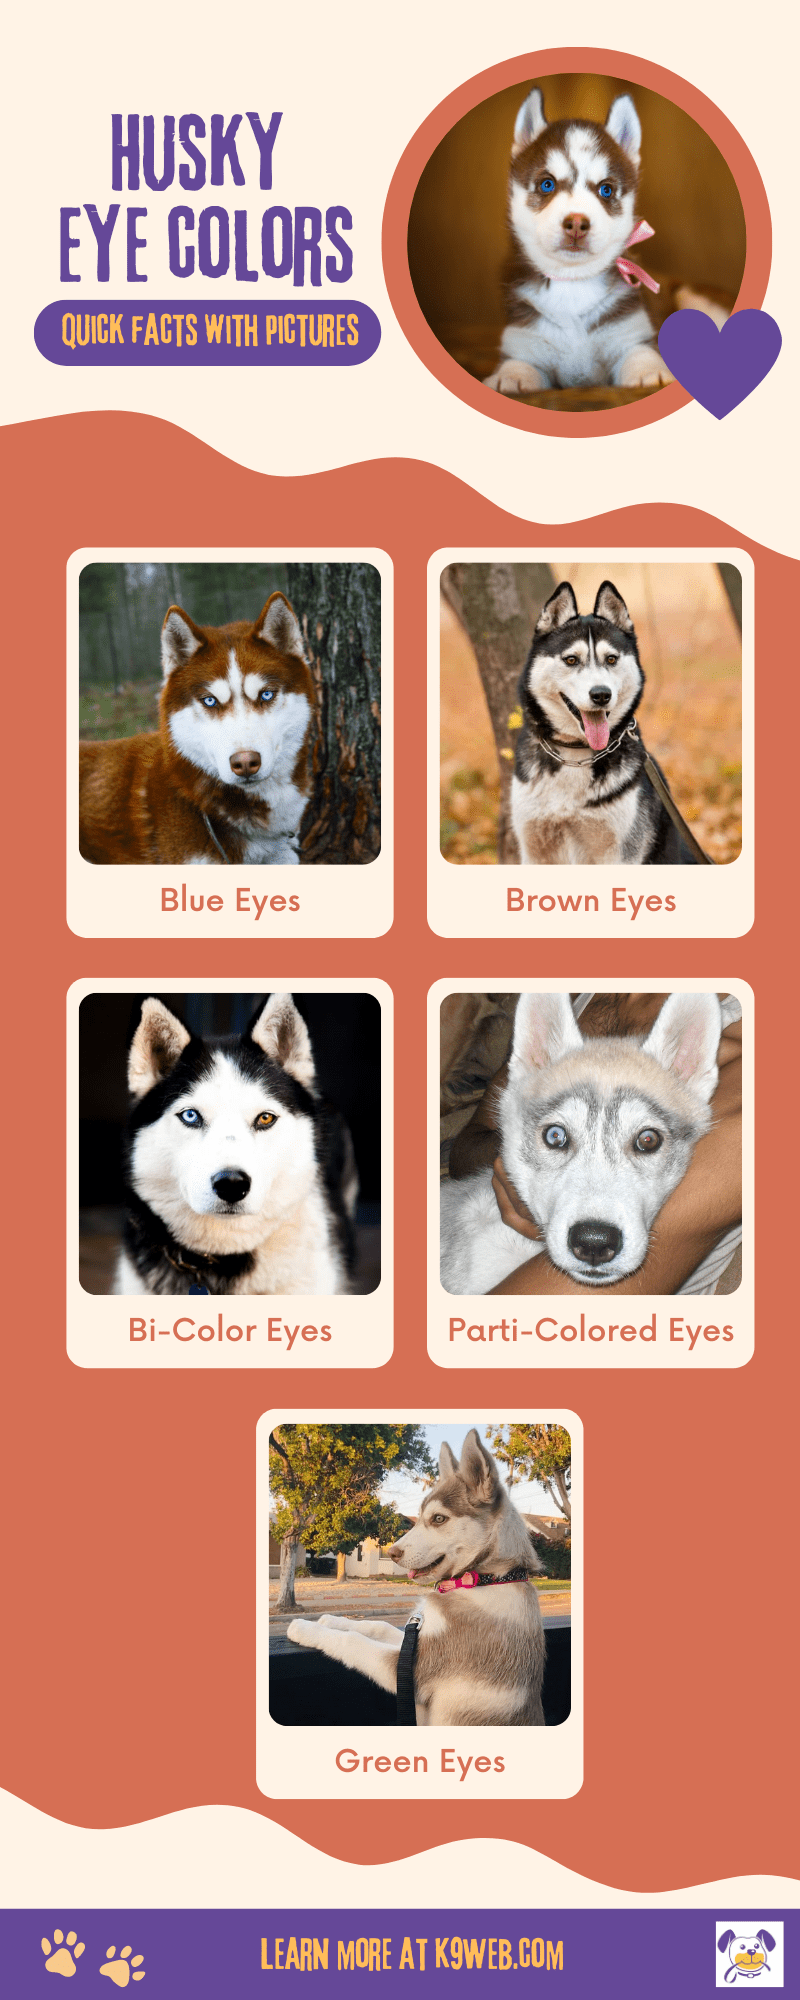 Husky Eye Colors Infographic by K9Web